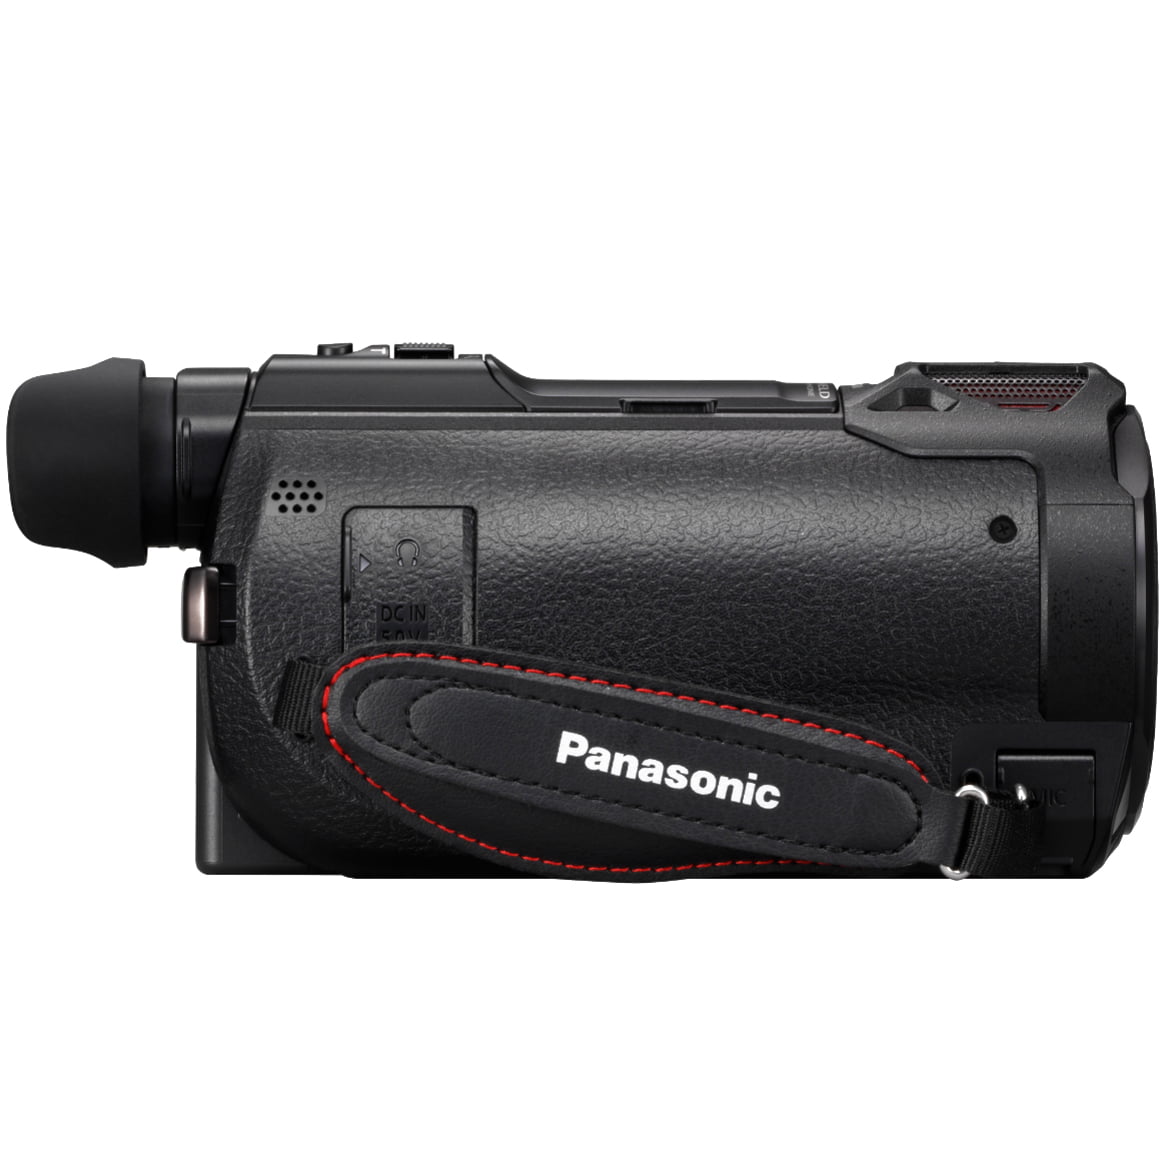 Panasonic HC-WXF991K 4K Ultra HD Camcorder with Wi-Fi, Multi Scene Twin  Camera - Black